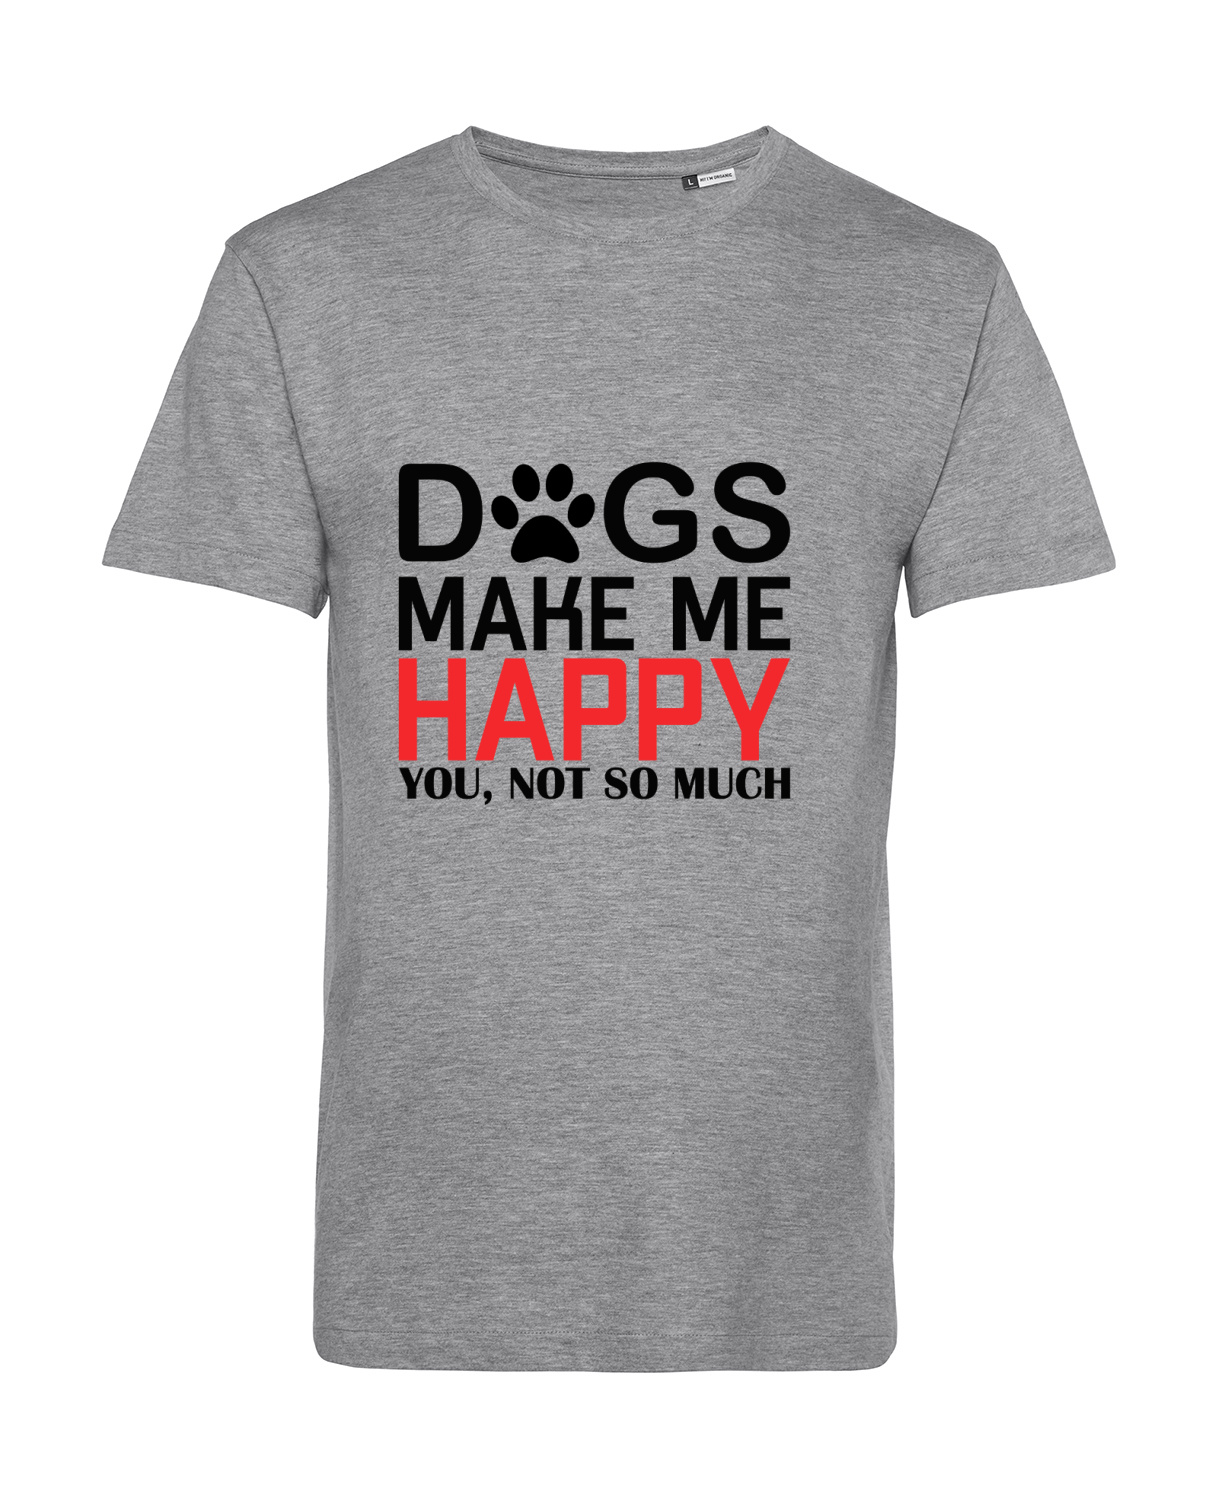 Nachhaltiges T-Shirt Herren Hunde - Dogs make me happy